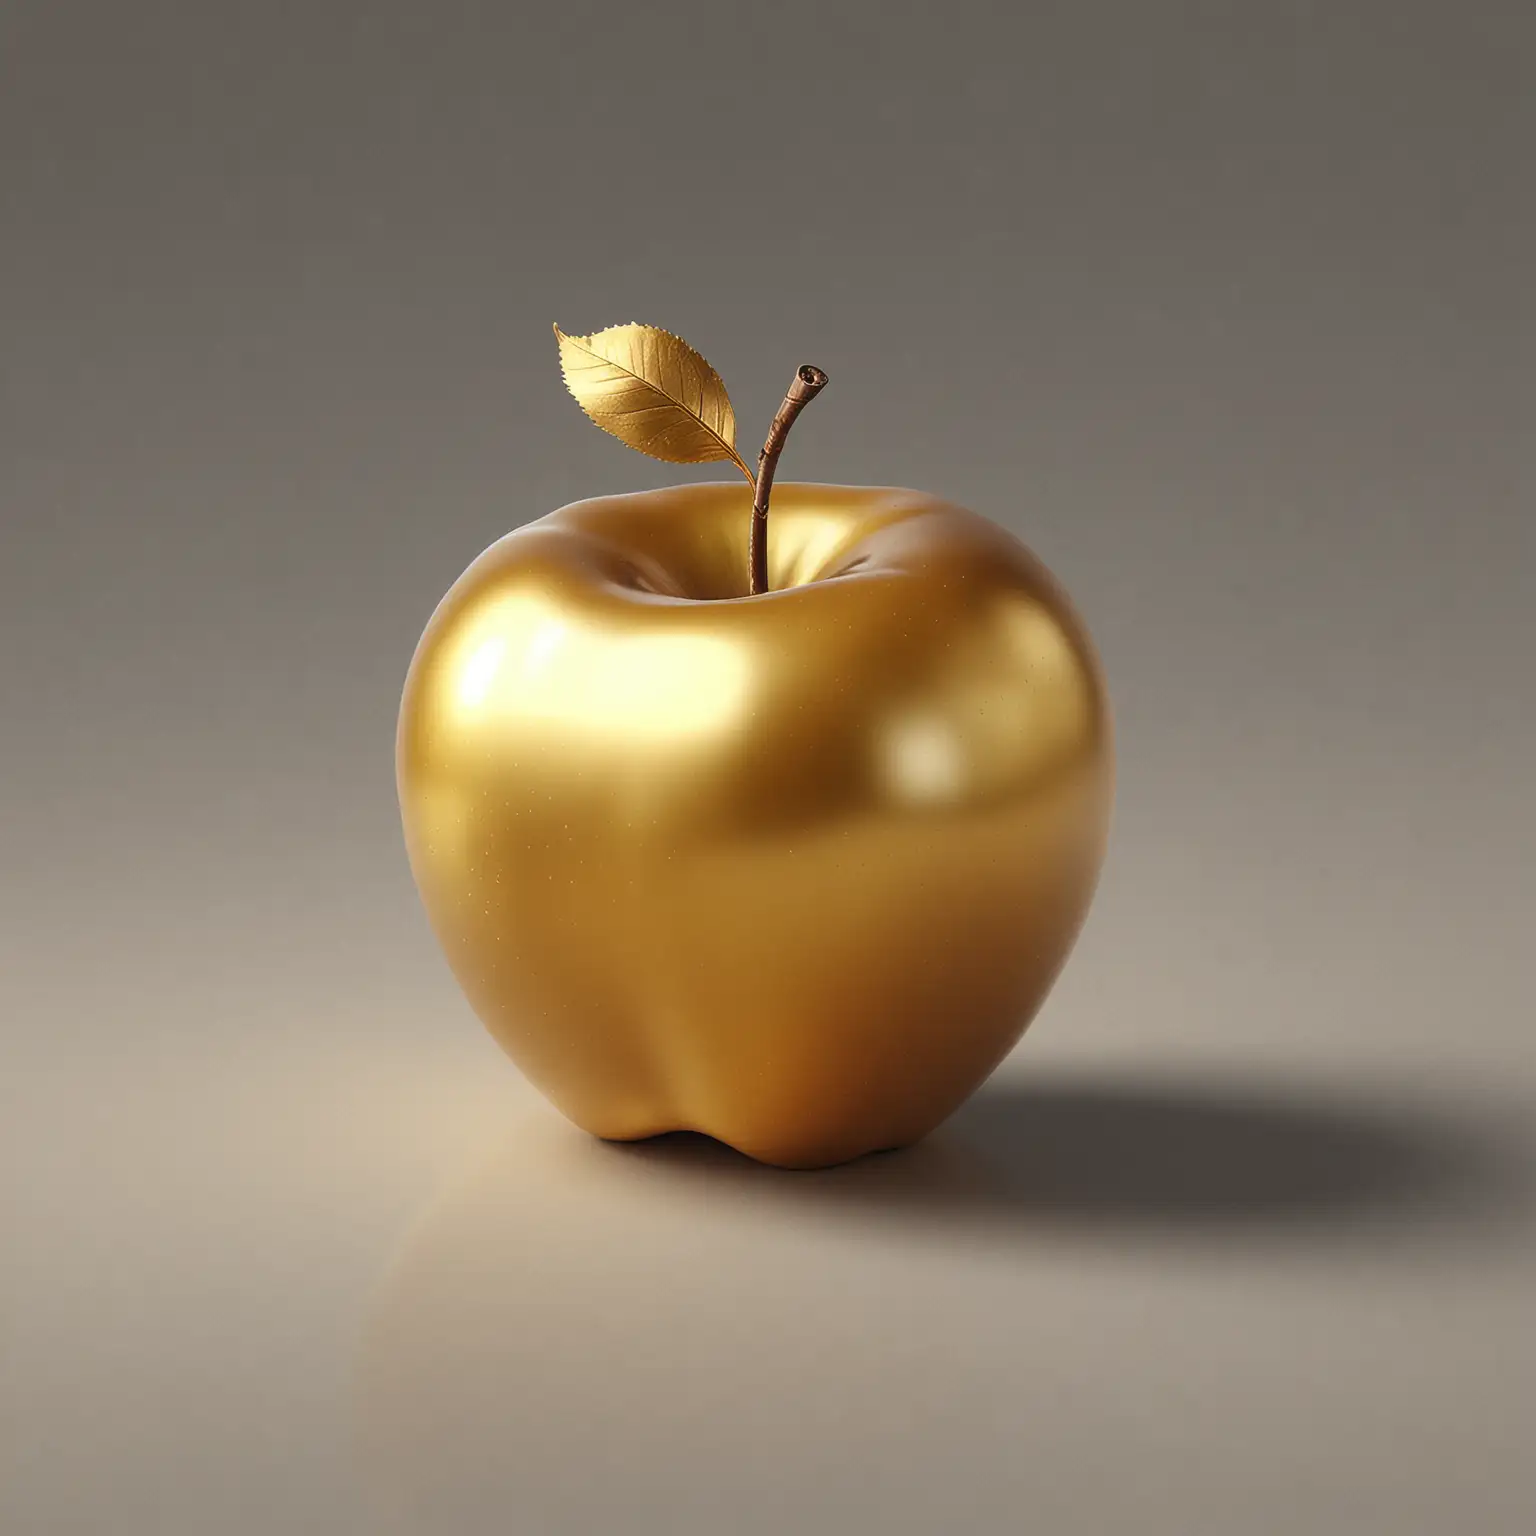 Shiny Golden Apple on Dark Background